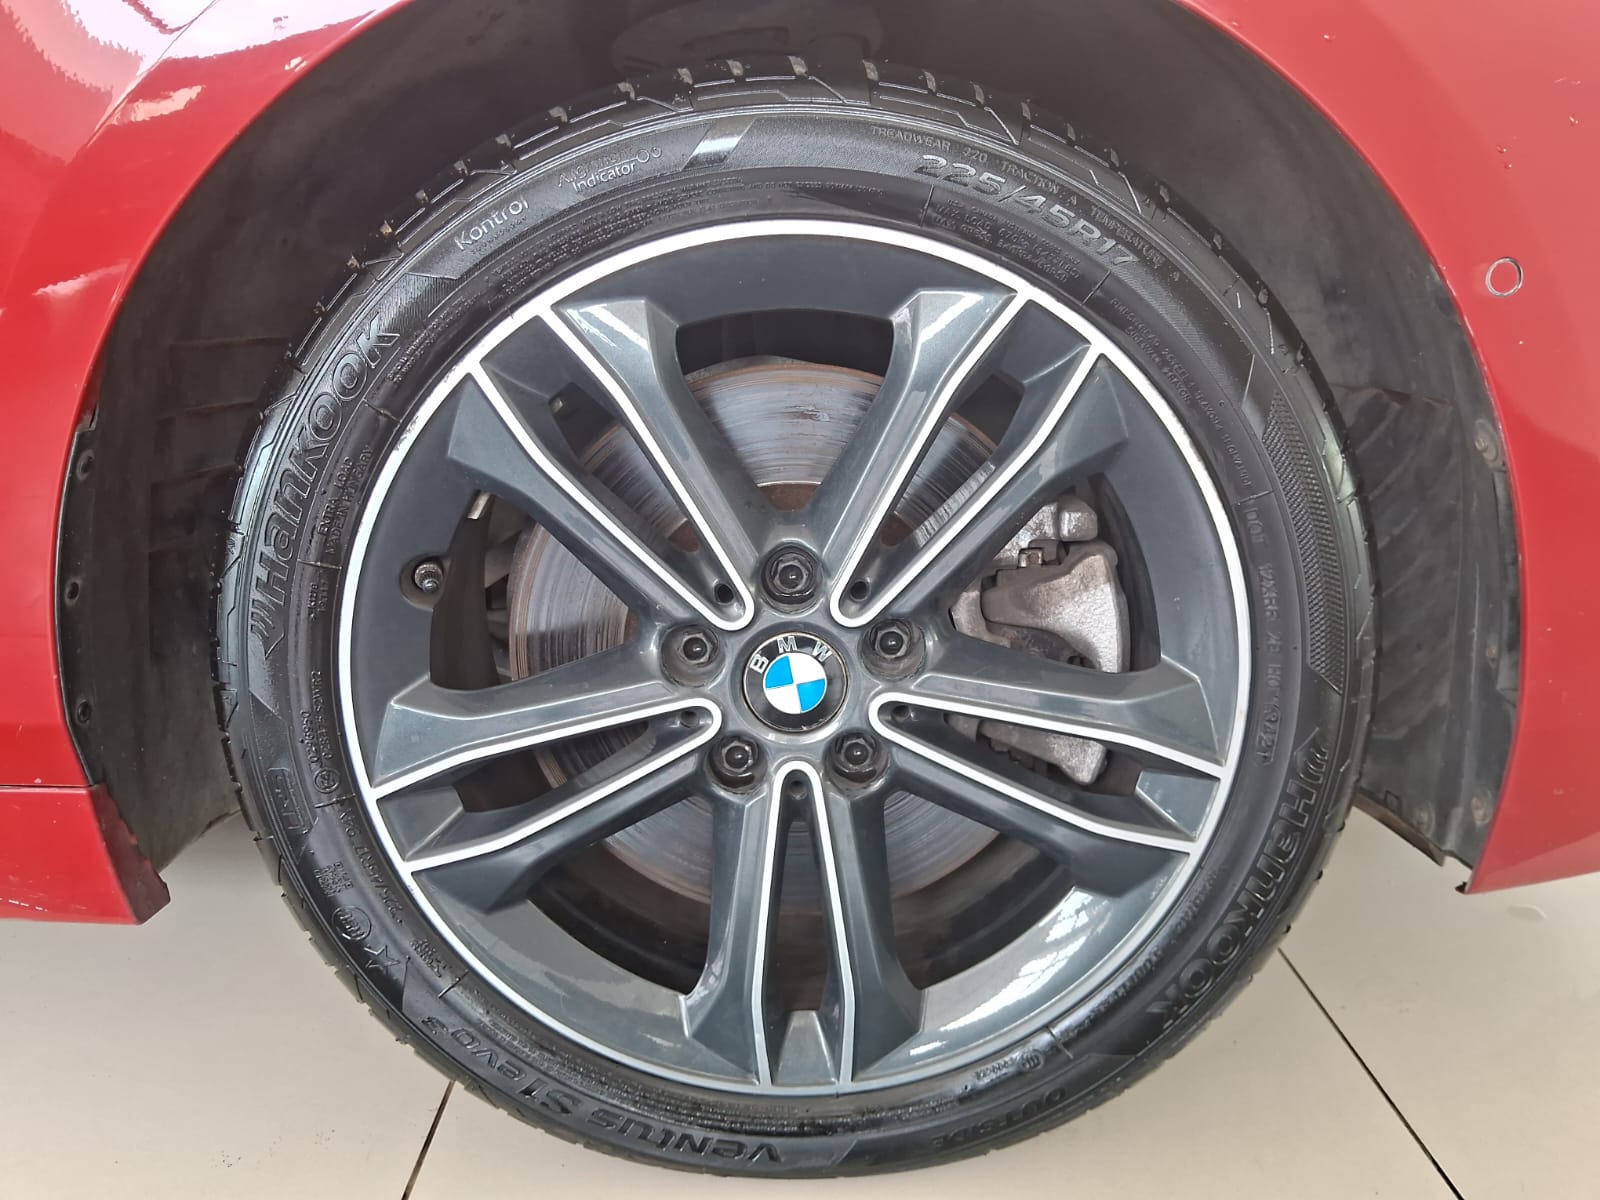 BMW 220d coupe sportline wheel